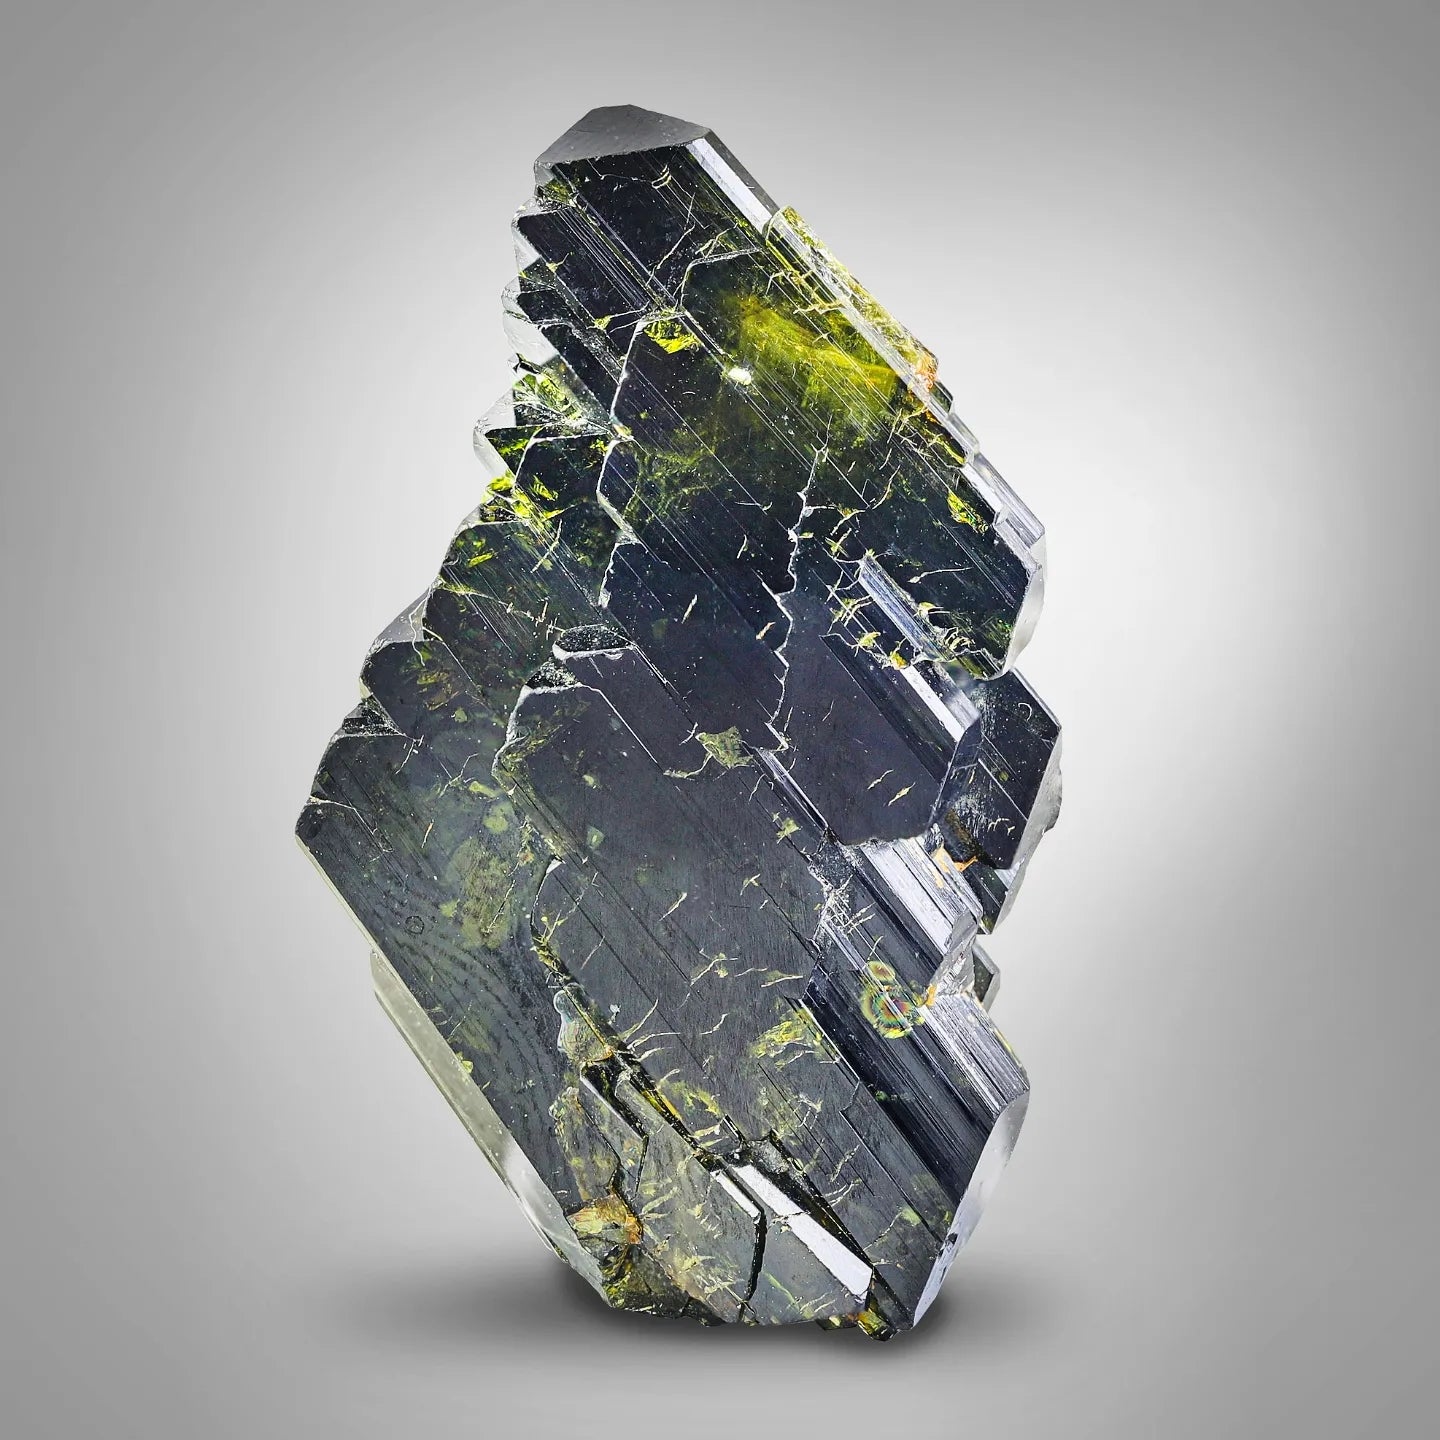 Luminous Double Terminated Green Epidote Crystal Spacemen from Pakistan